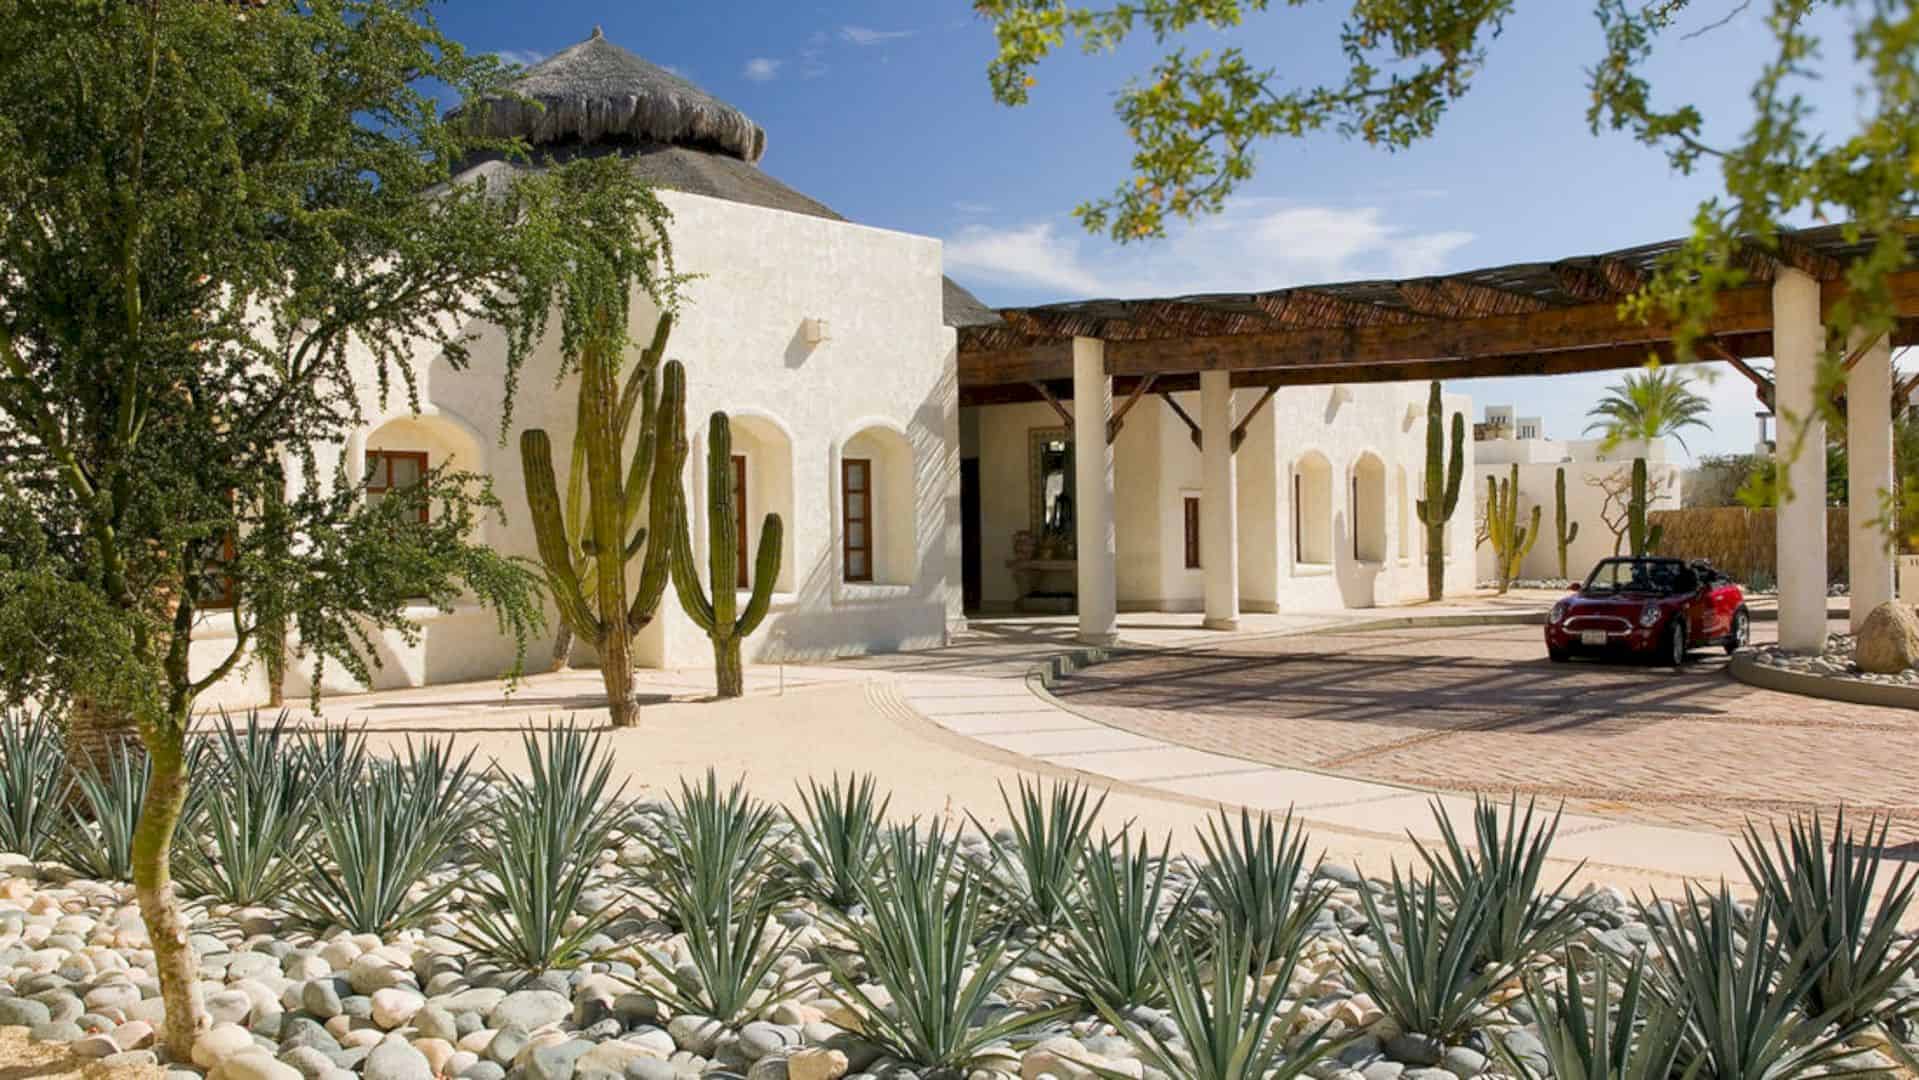 Las Ventanas Al Paraiso Award Winning Mexican Resort On A Seemingly Lifeless Landscape 11